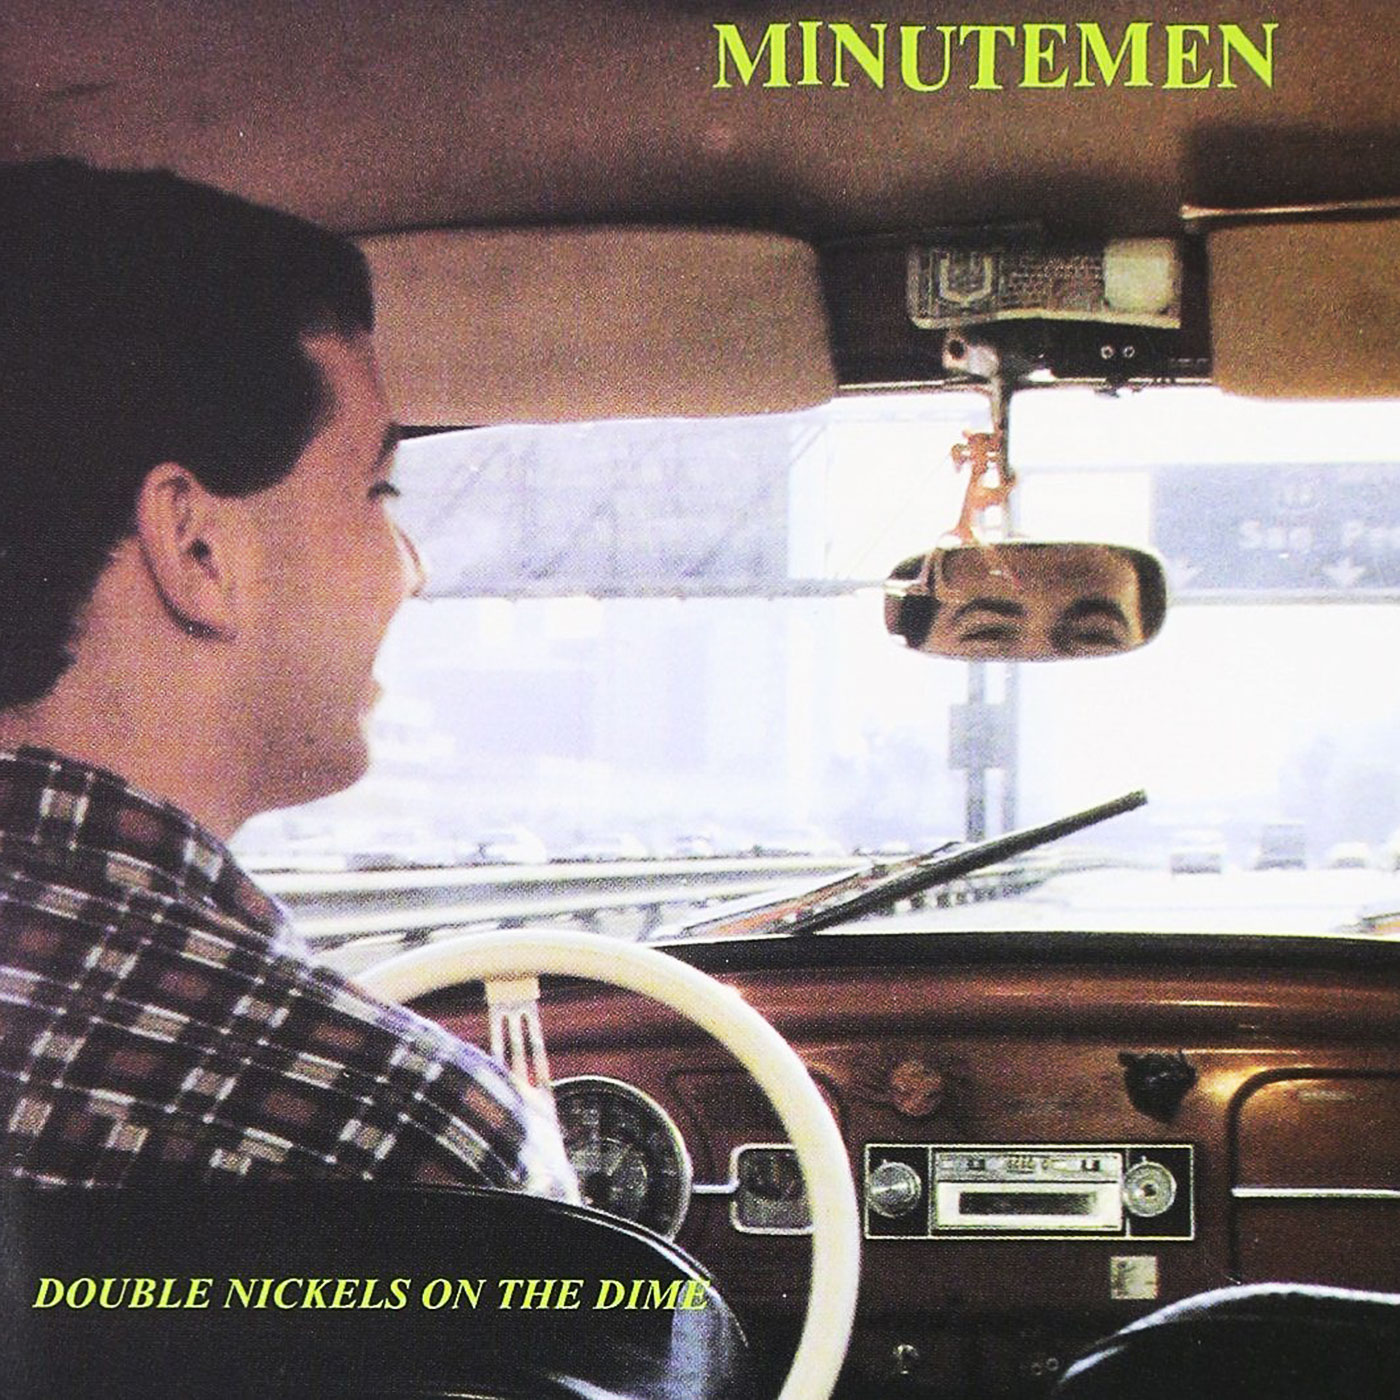 543 Minutemen – Double Nickels on the Dime